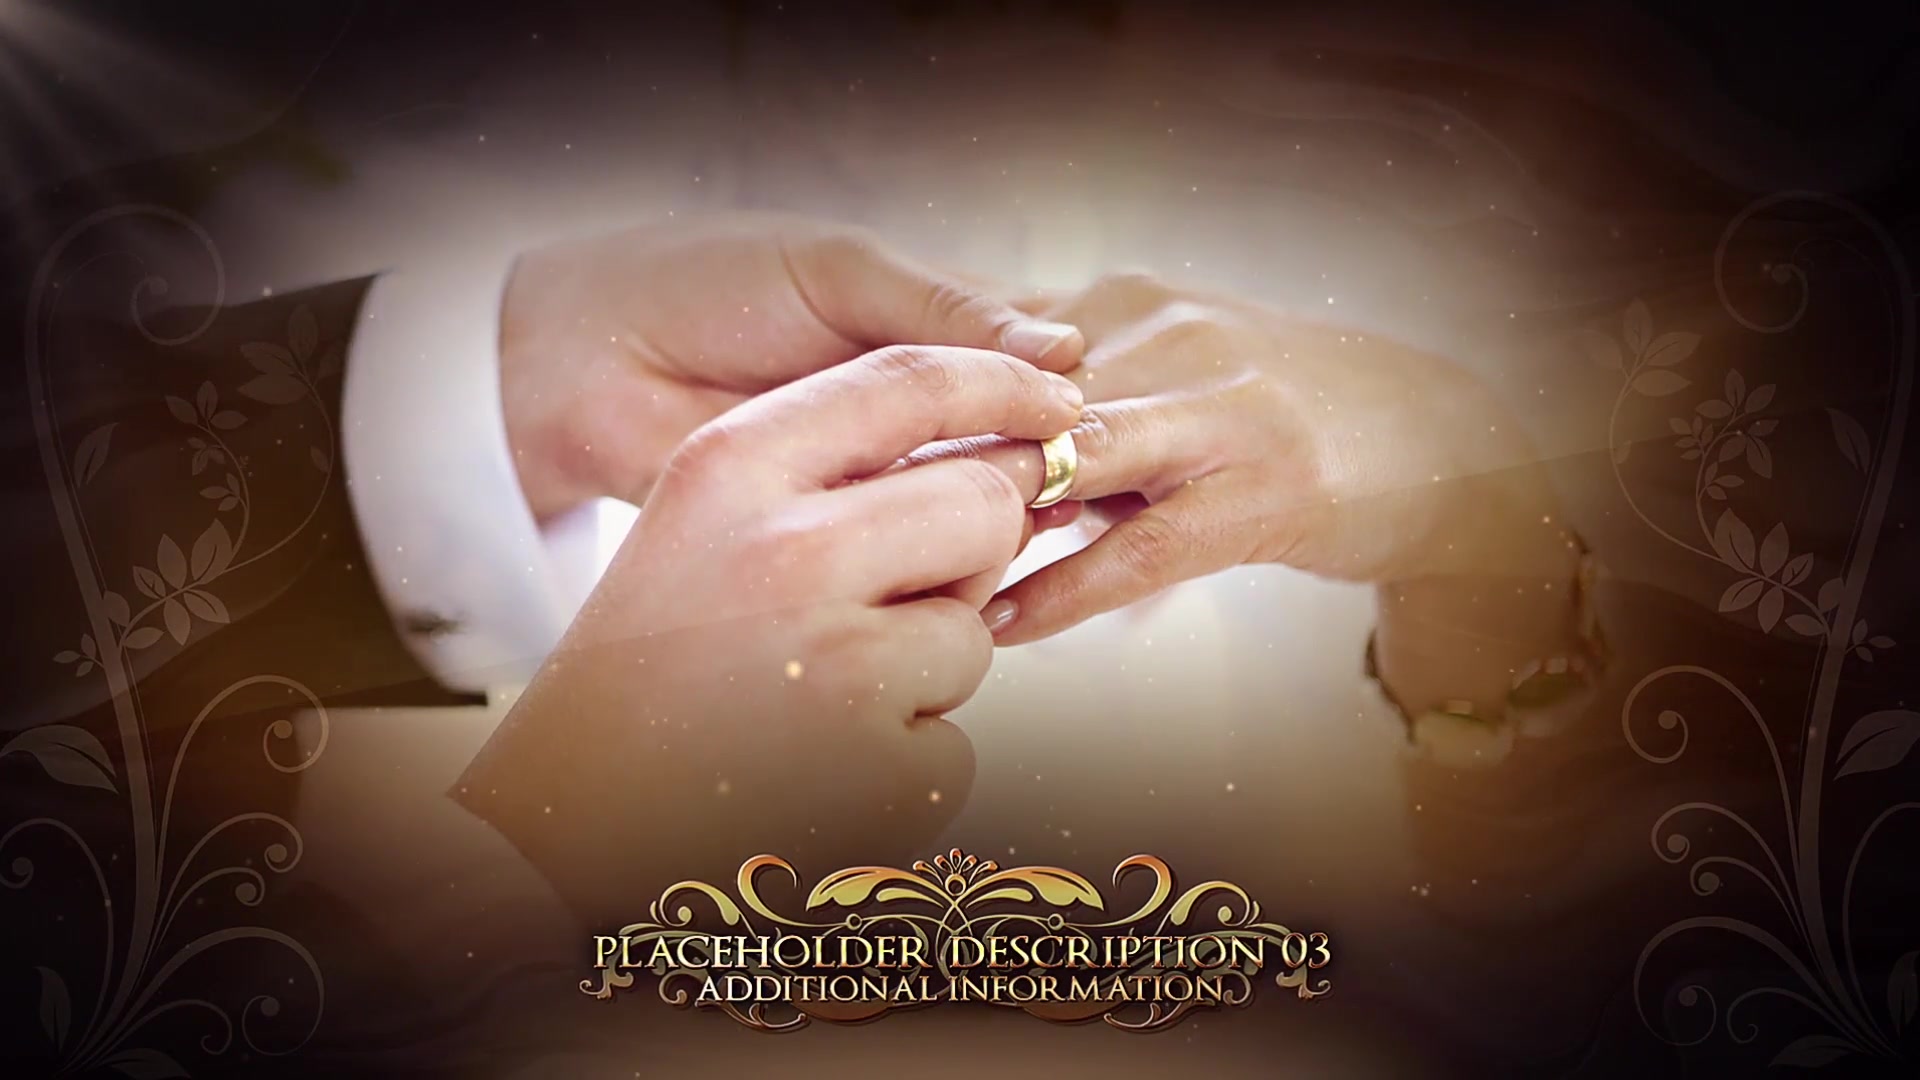 Romantic Wedding - Download Videohive 5600098